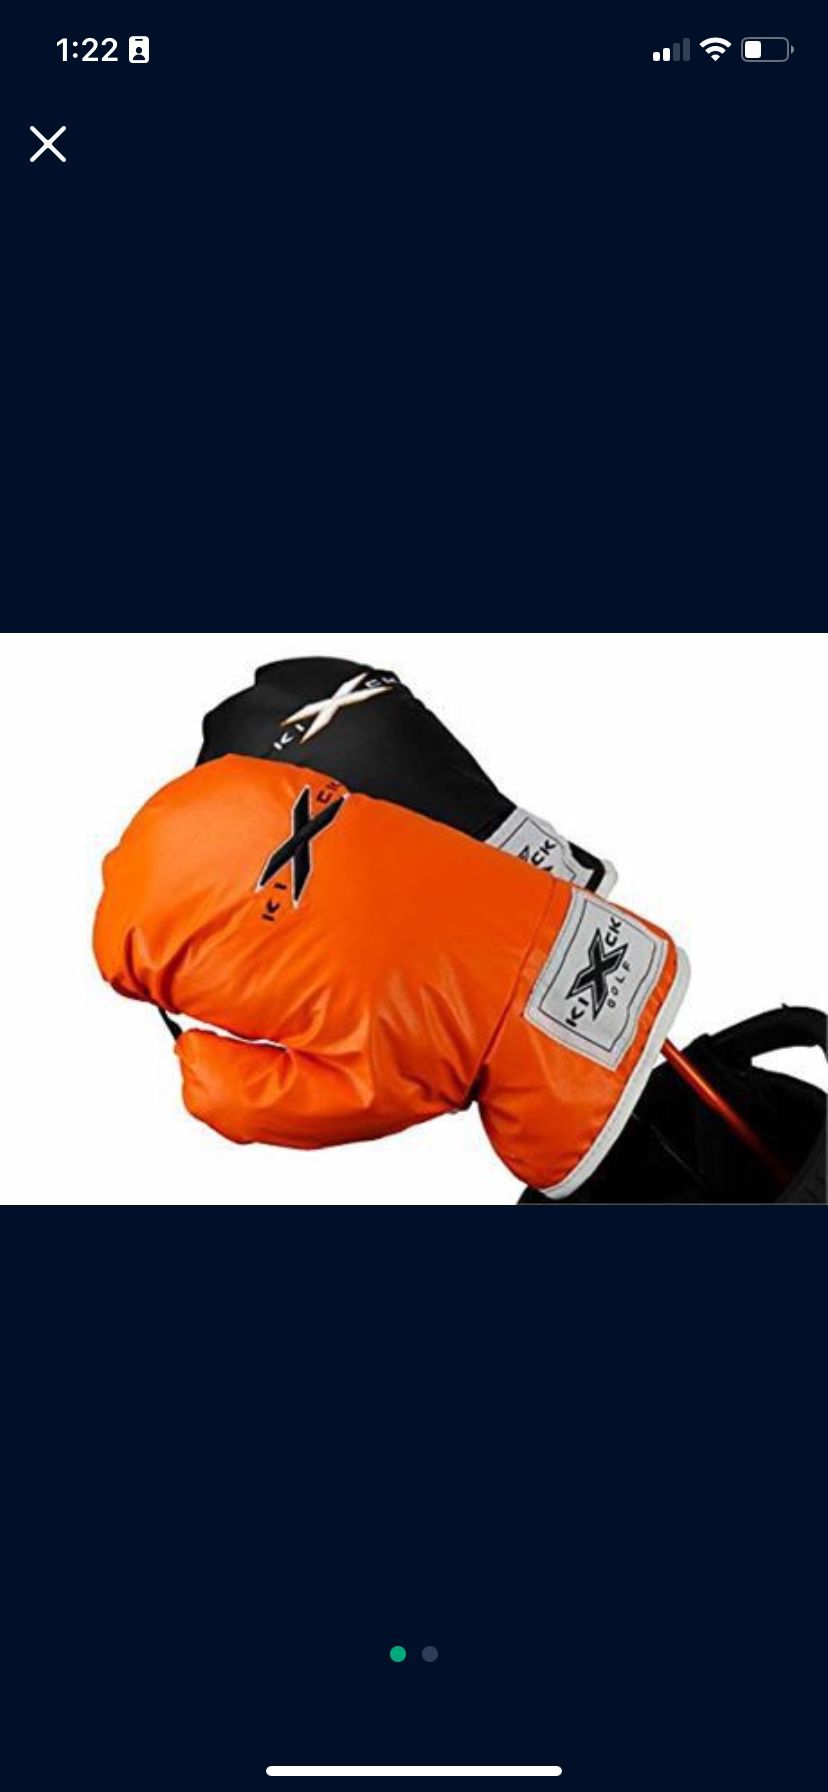 KICK-X GOLF Boxing Glove Driver Headcover Orange